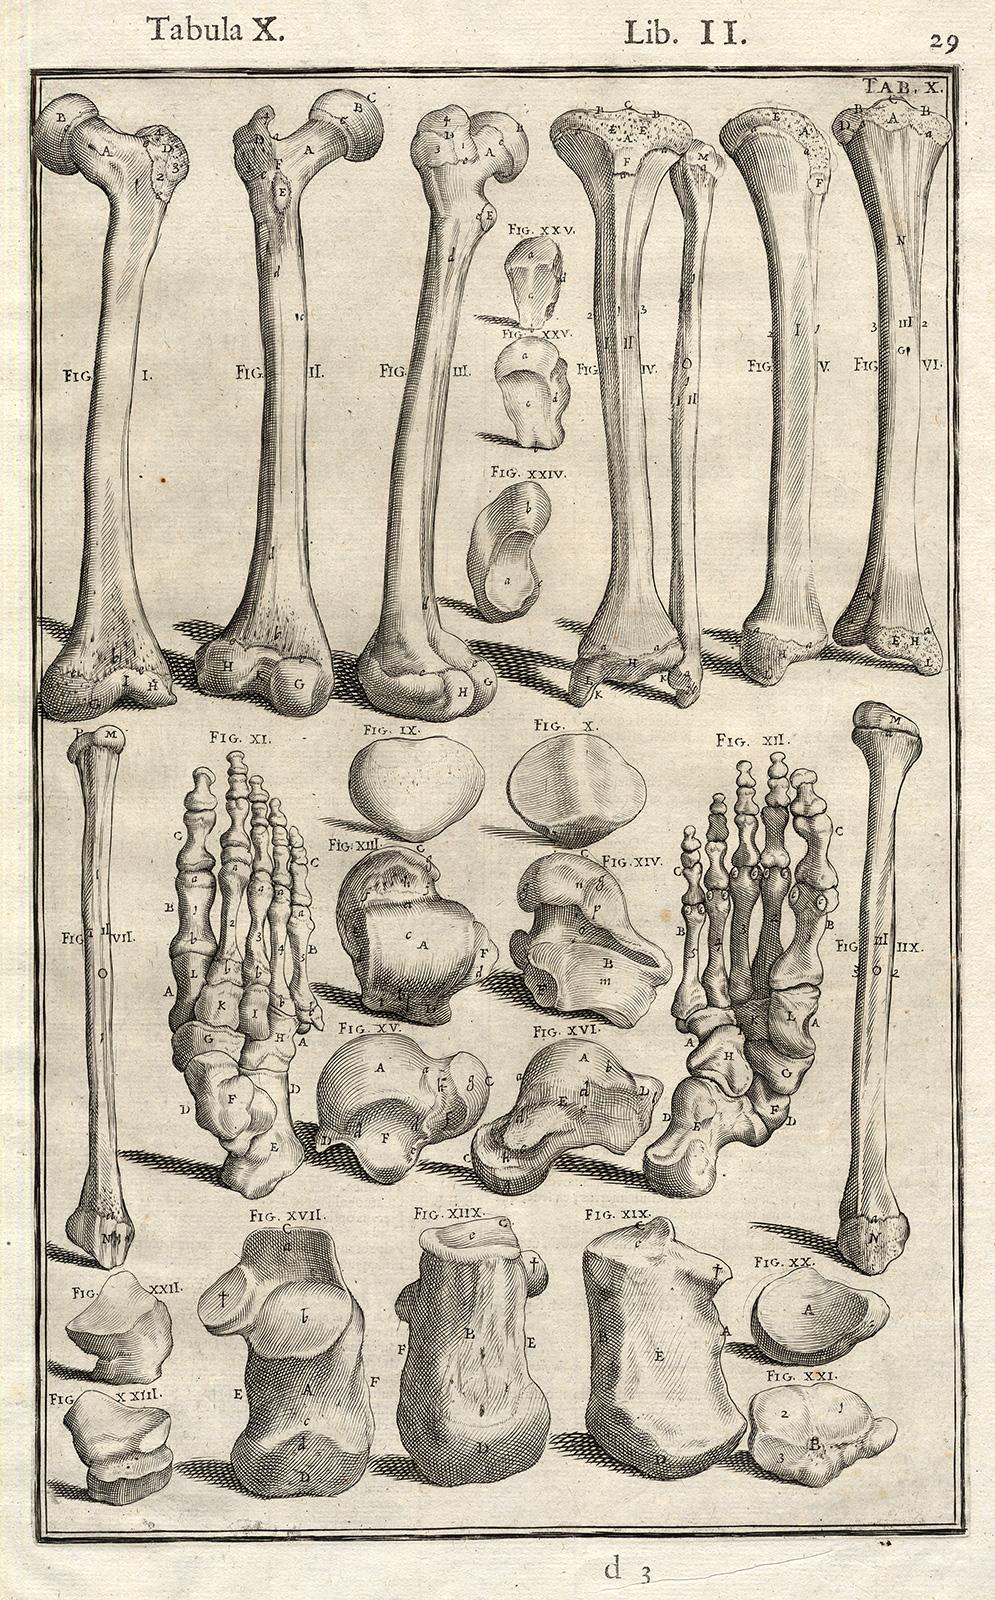 Adrianus Spigelius Print - Anatomical print - bones of legs, feet, etc. - by Spigelius - Engraving - 17th c